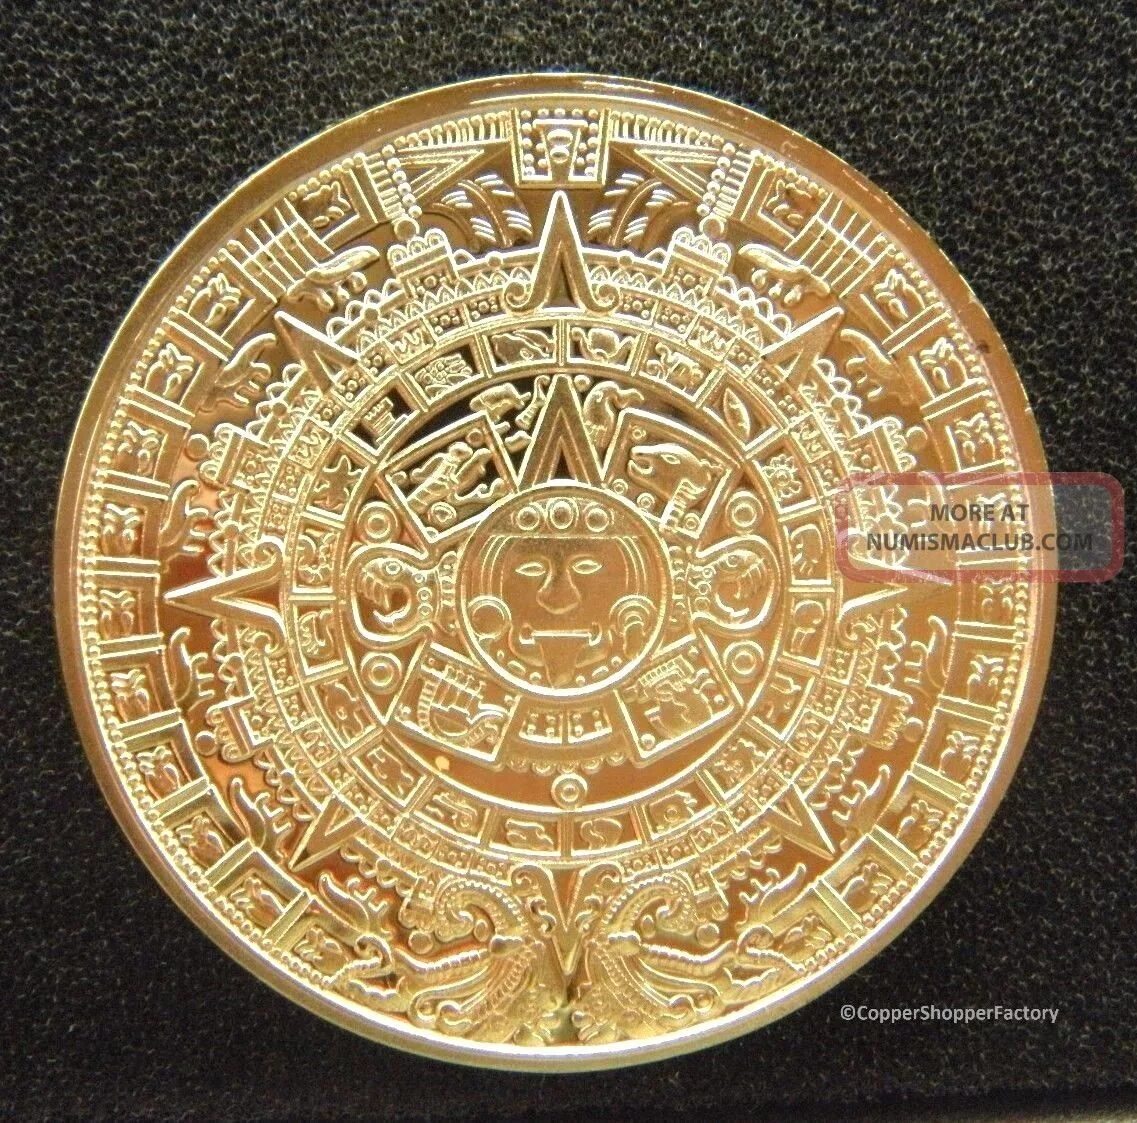 Aztec gold aztec gold org ru. Ацтекское золото с солнцем. Золотая монета ацтеков. Золото ацтеков в Каменном сундуке. Ацтекское золото в реале.